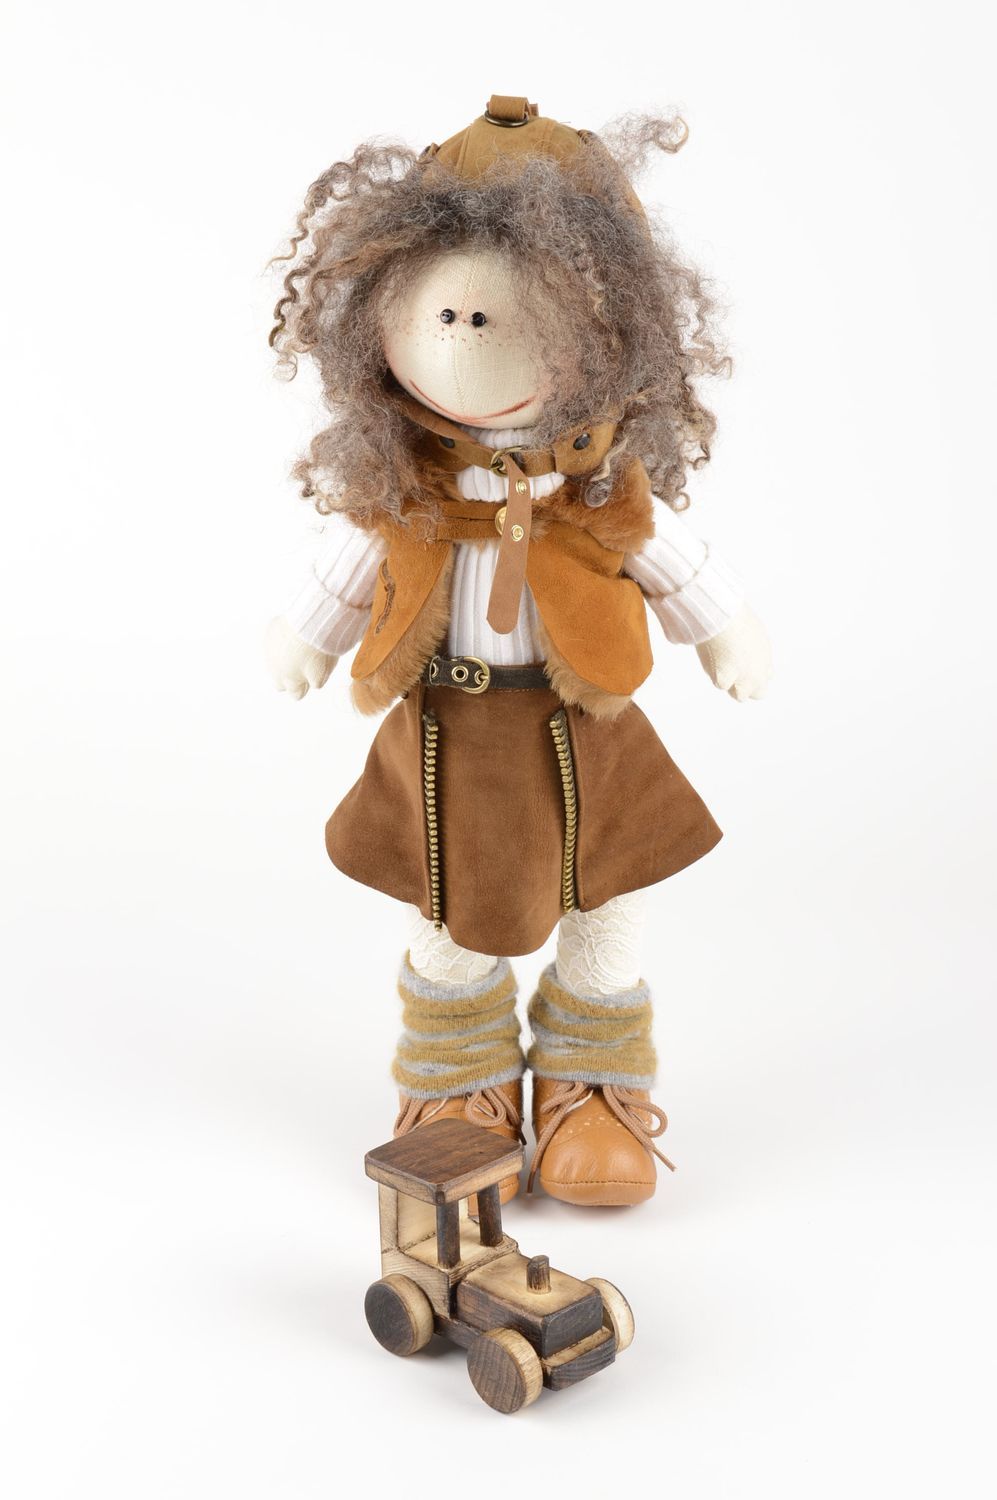 Handmade toy unusual dolls for girls gift ideas soft doll for children photo 1